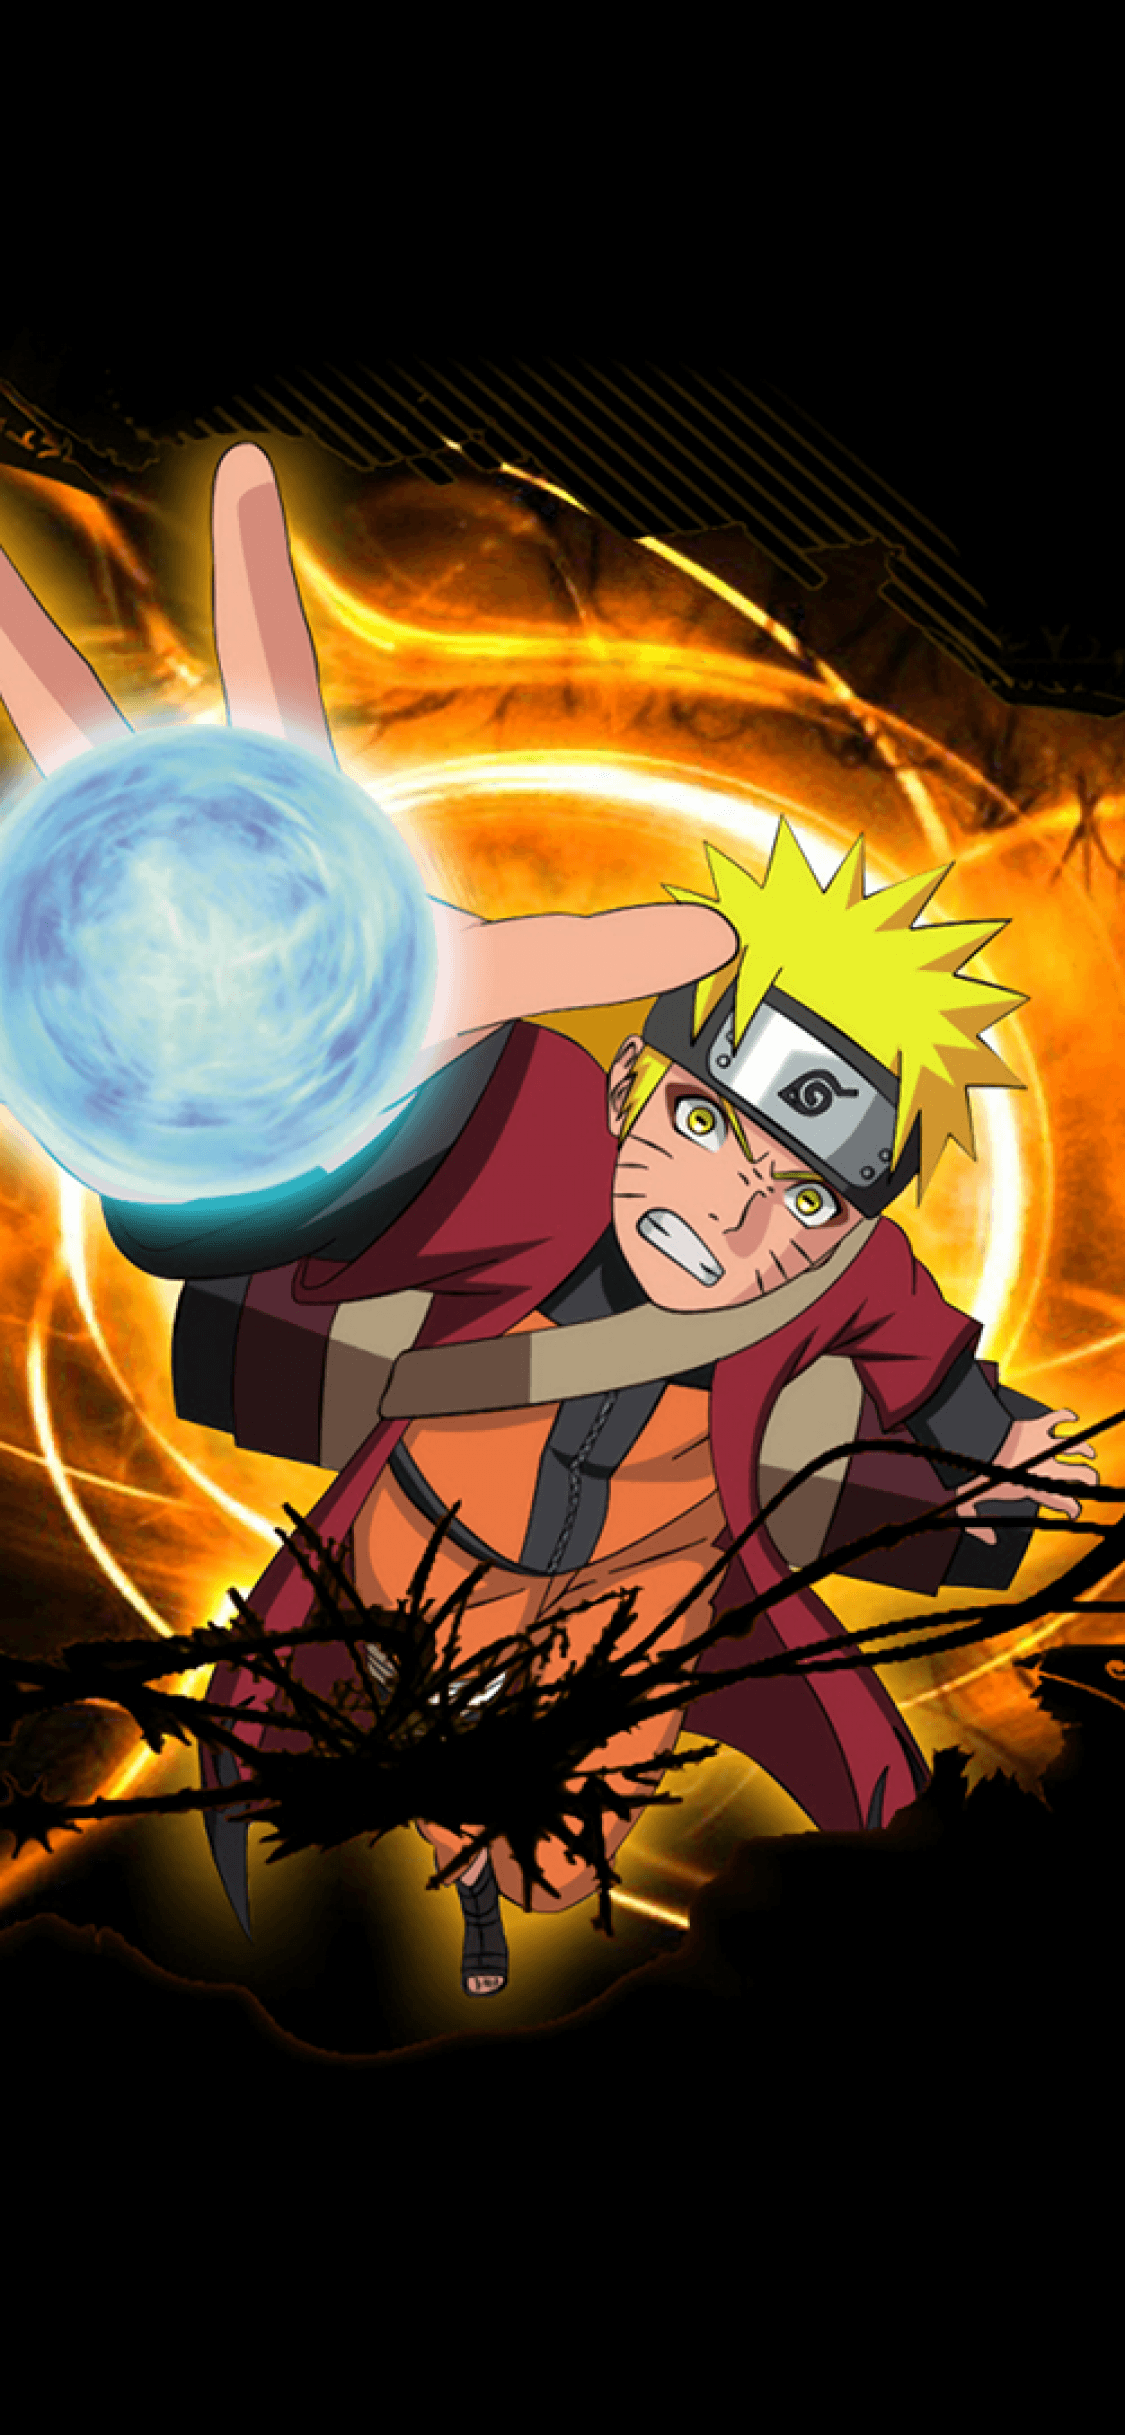 Naruto Anime Iphone X Wallpaper Andriblog001 Naruto wallpaper